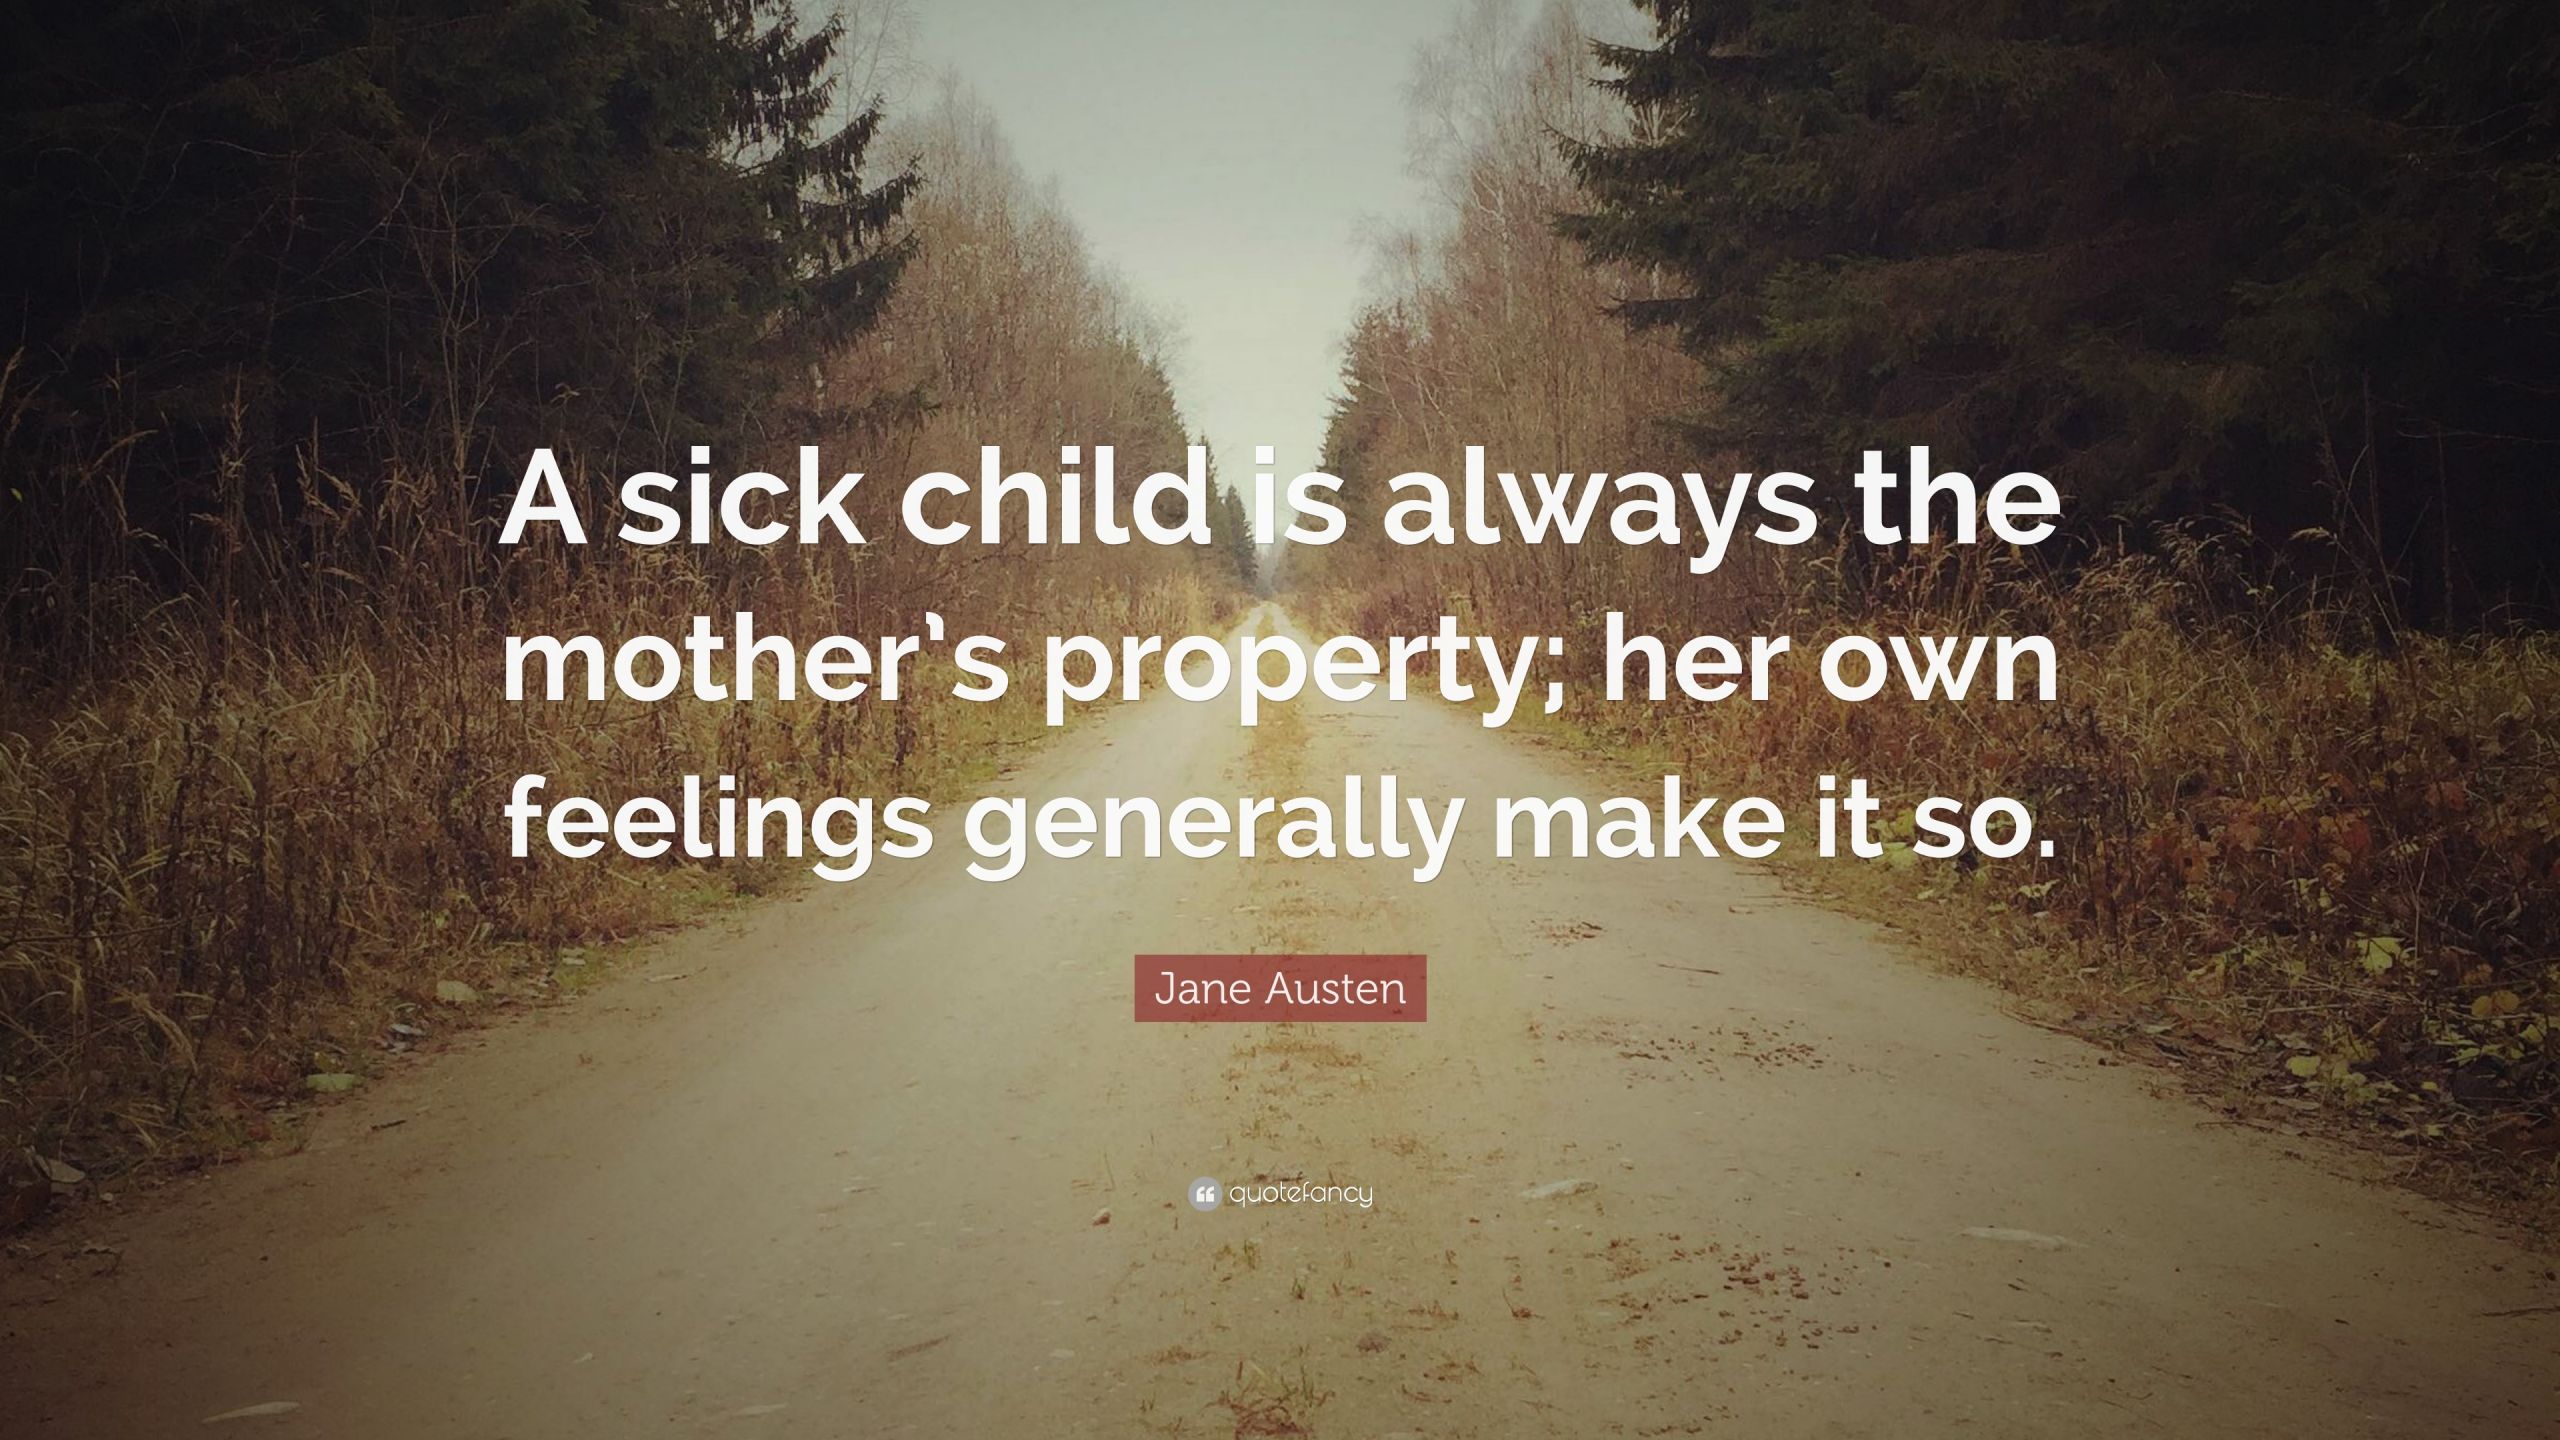 Sick Kids Quote
 Jane Austen Quote “A sick child is always the mother’s